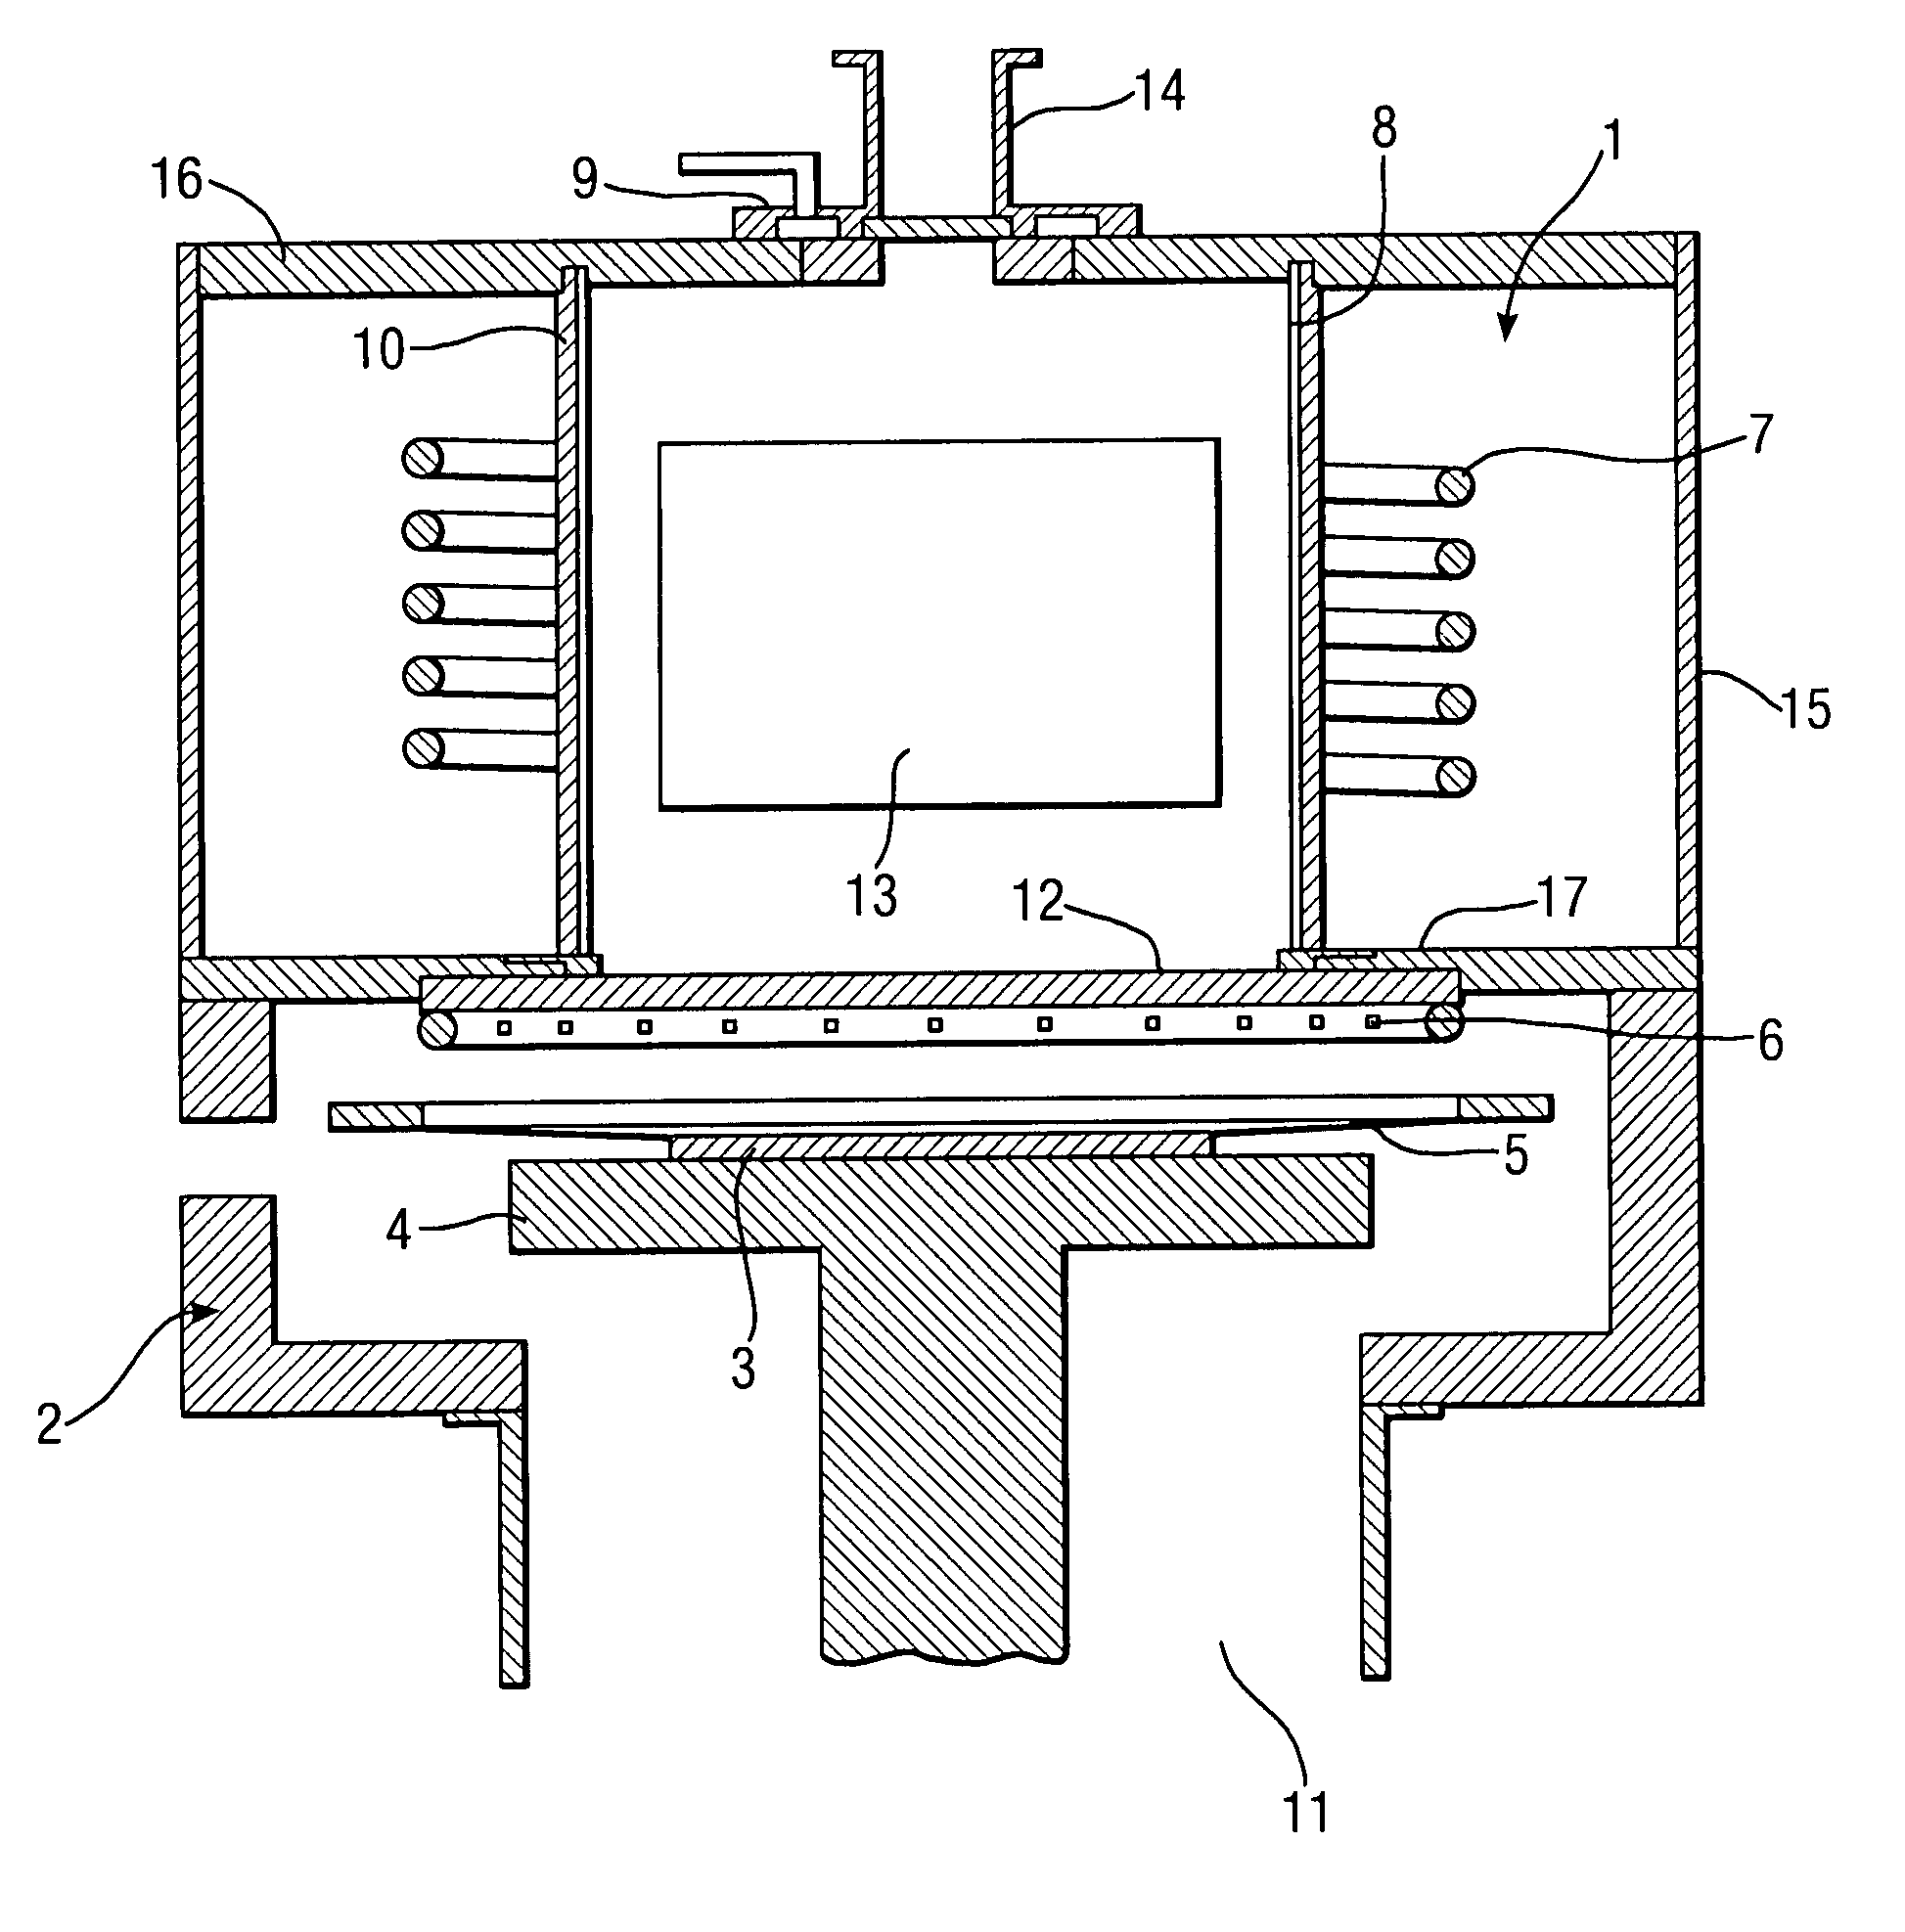 Surface processing apparatus